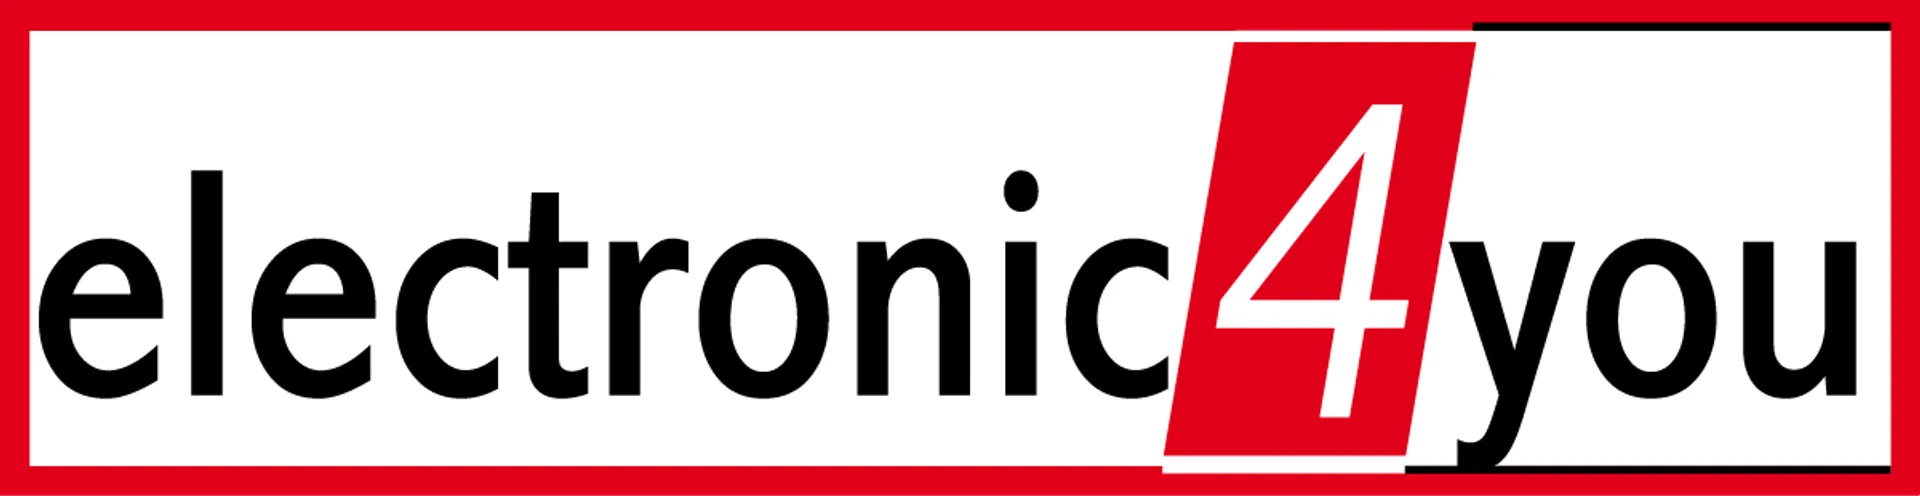 ELECTRONIC4YOU logo